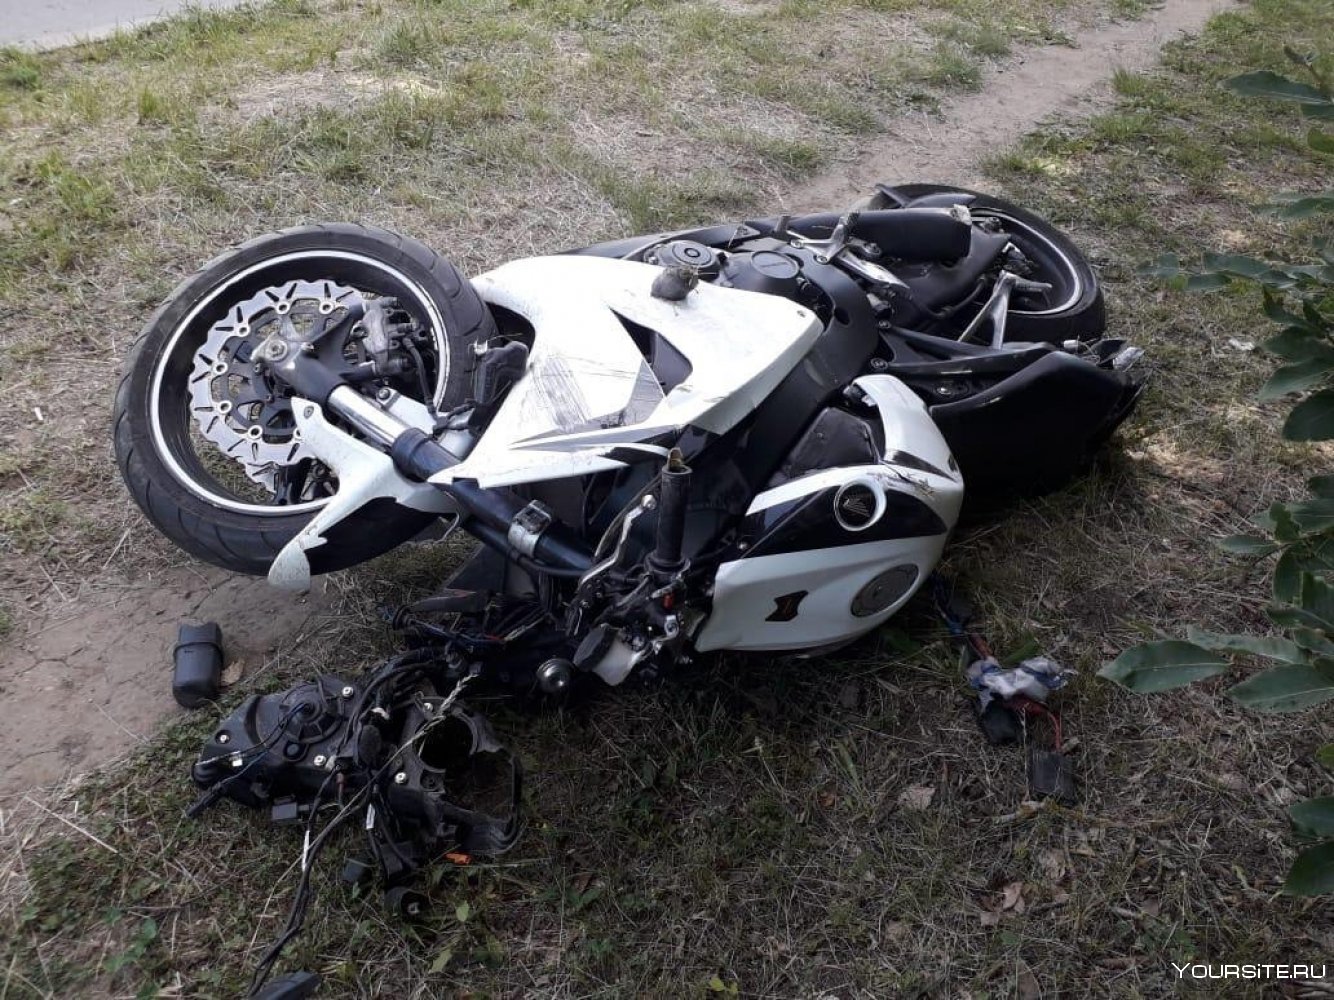 Разбил мотоцикл. Разбитый мотоцикл Ямаха р1. Разбитый мотоцикл Кавасаки.